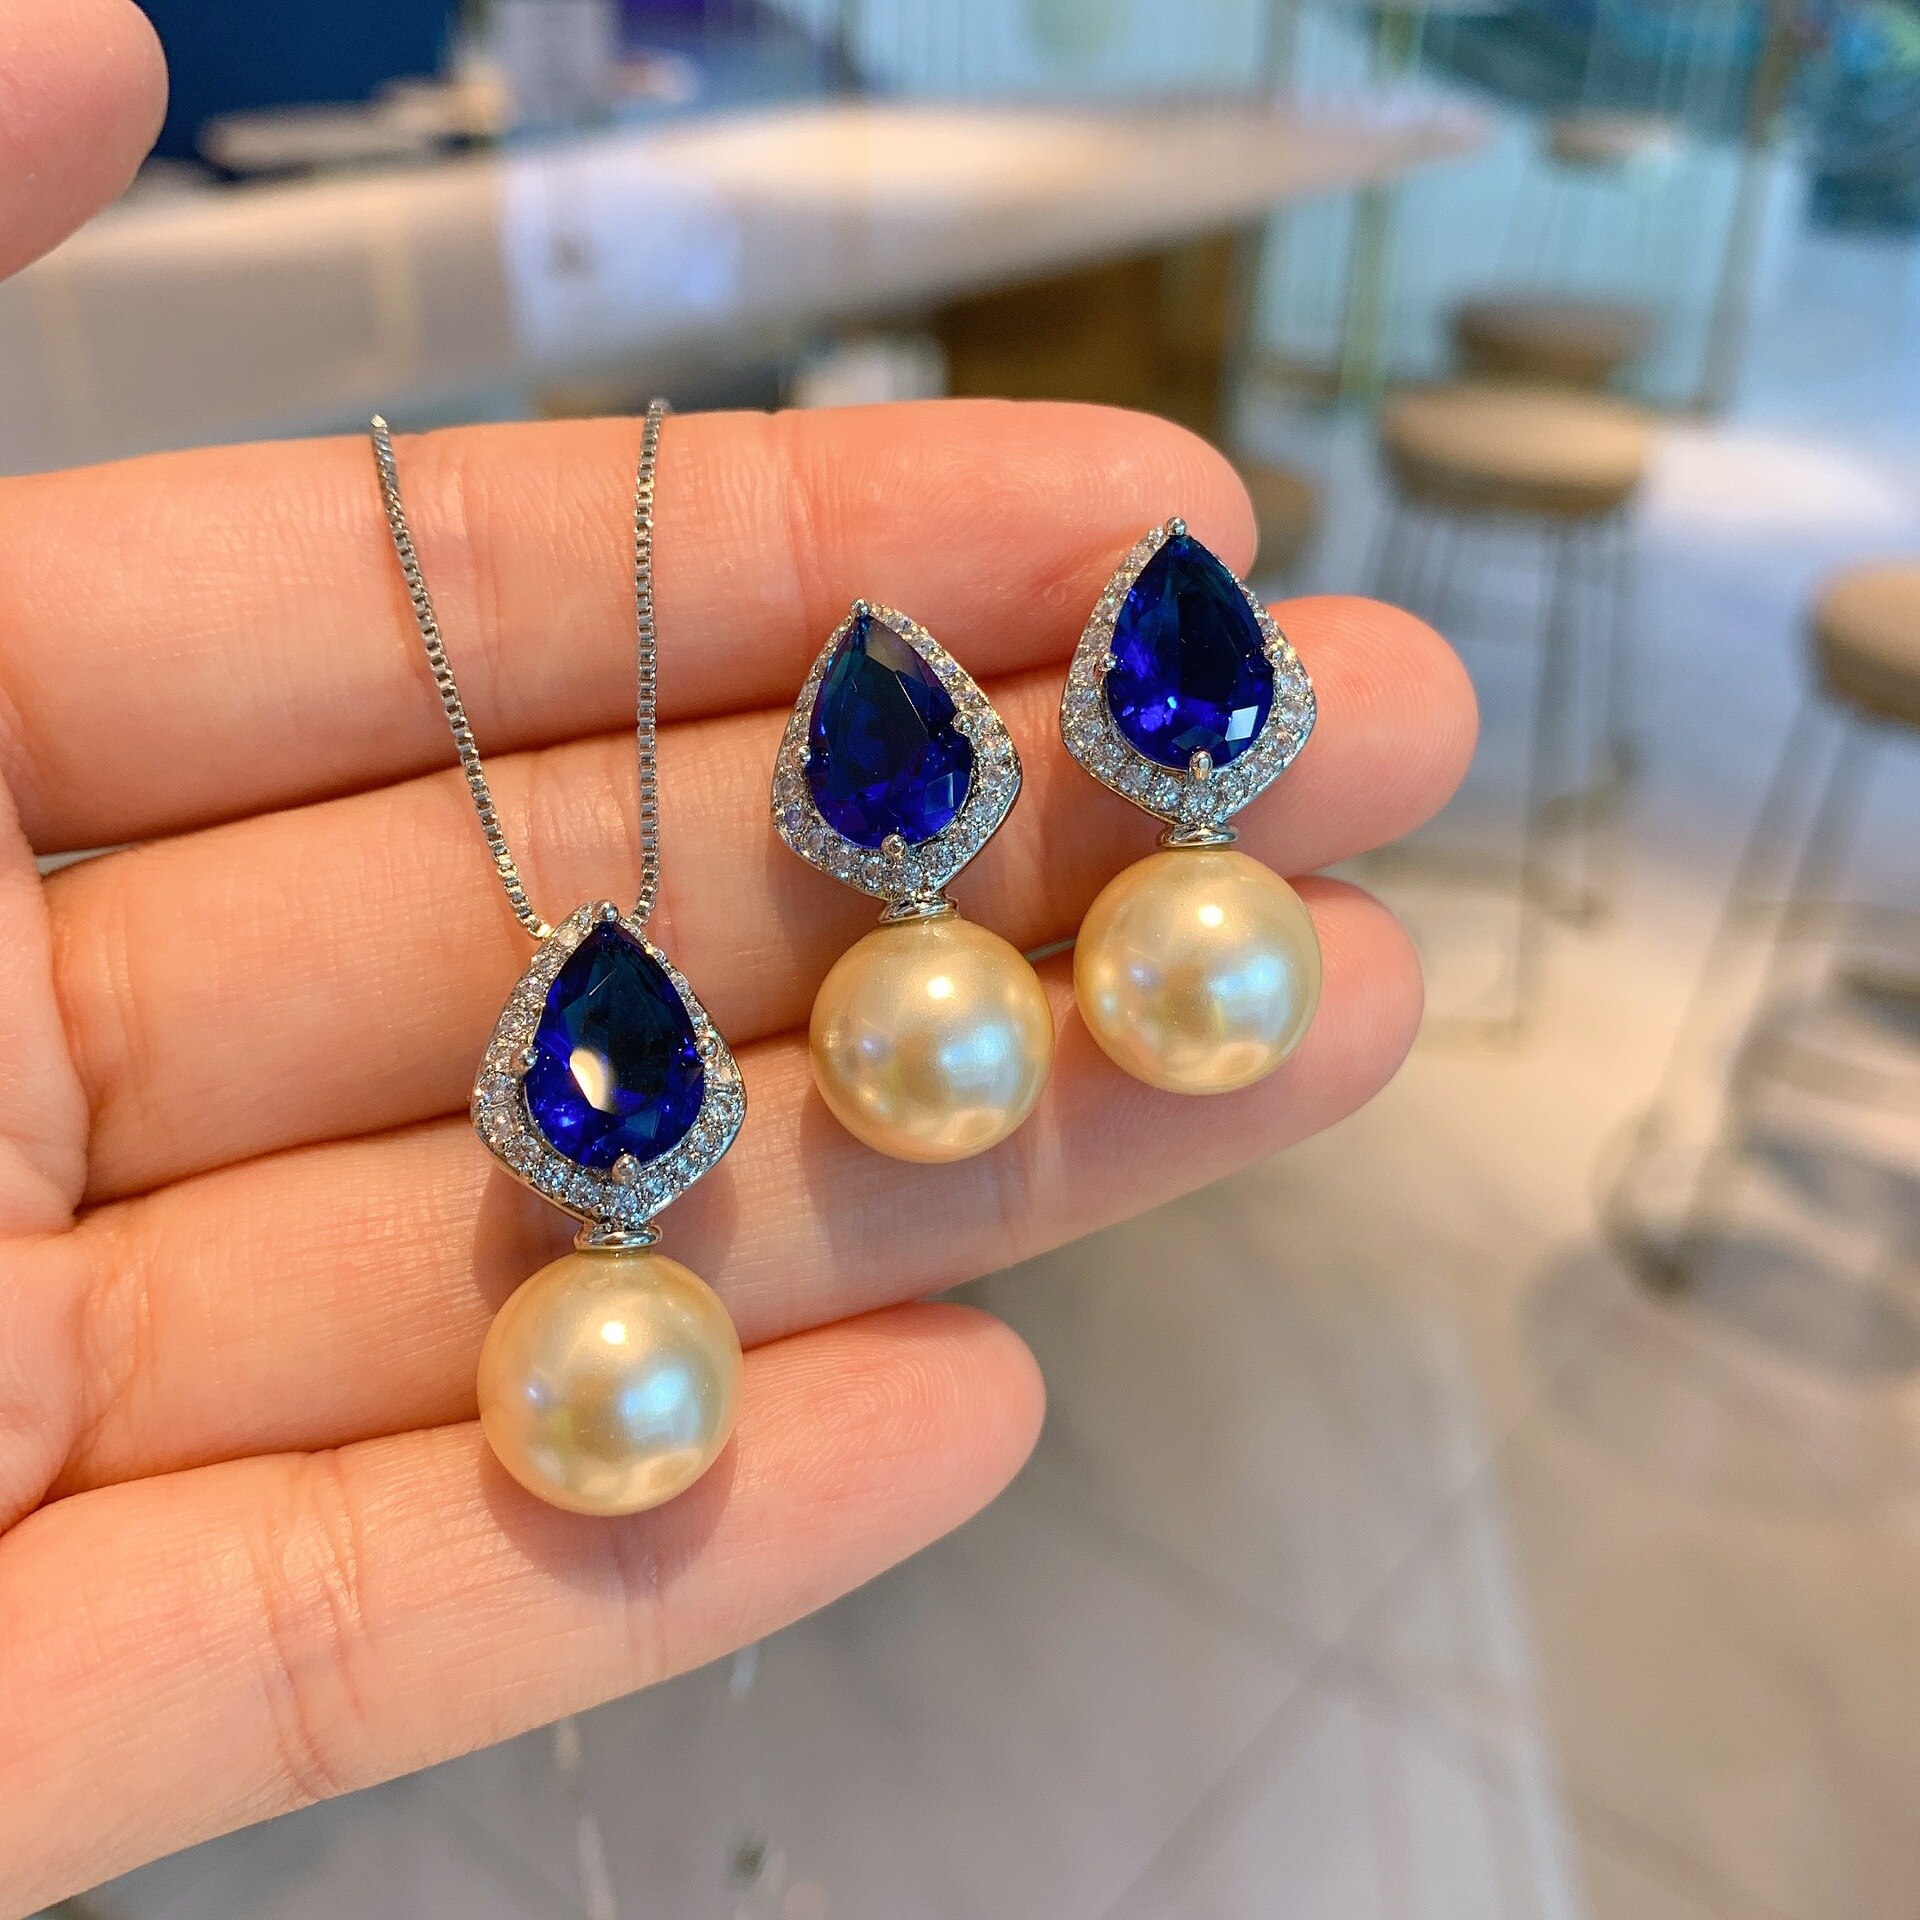 12mm-Pearl-Sapphire-Gemstones-Necklace-Vintage-Earrings-2022-Trend-Wedding-Luxury-Dangle-Fashion-Jewelry-2022-Gift.jpg